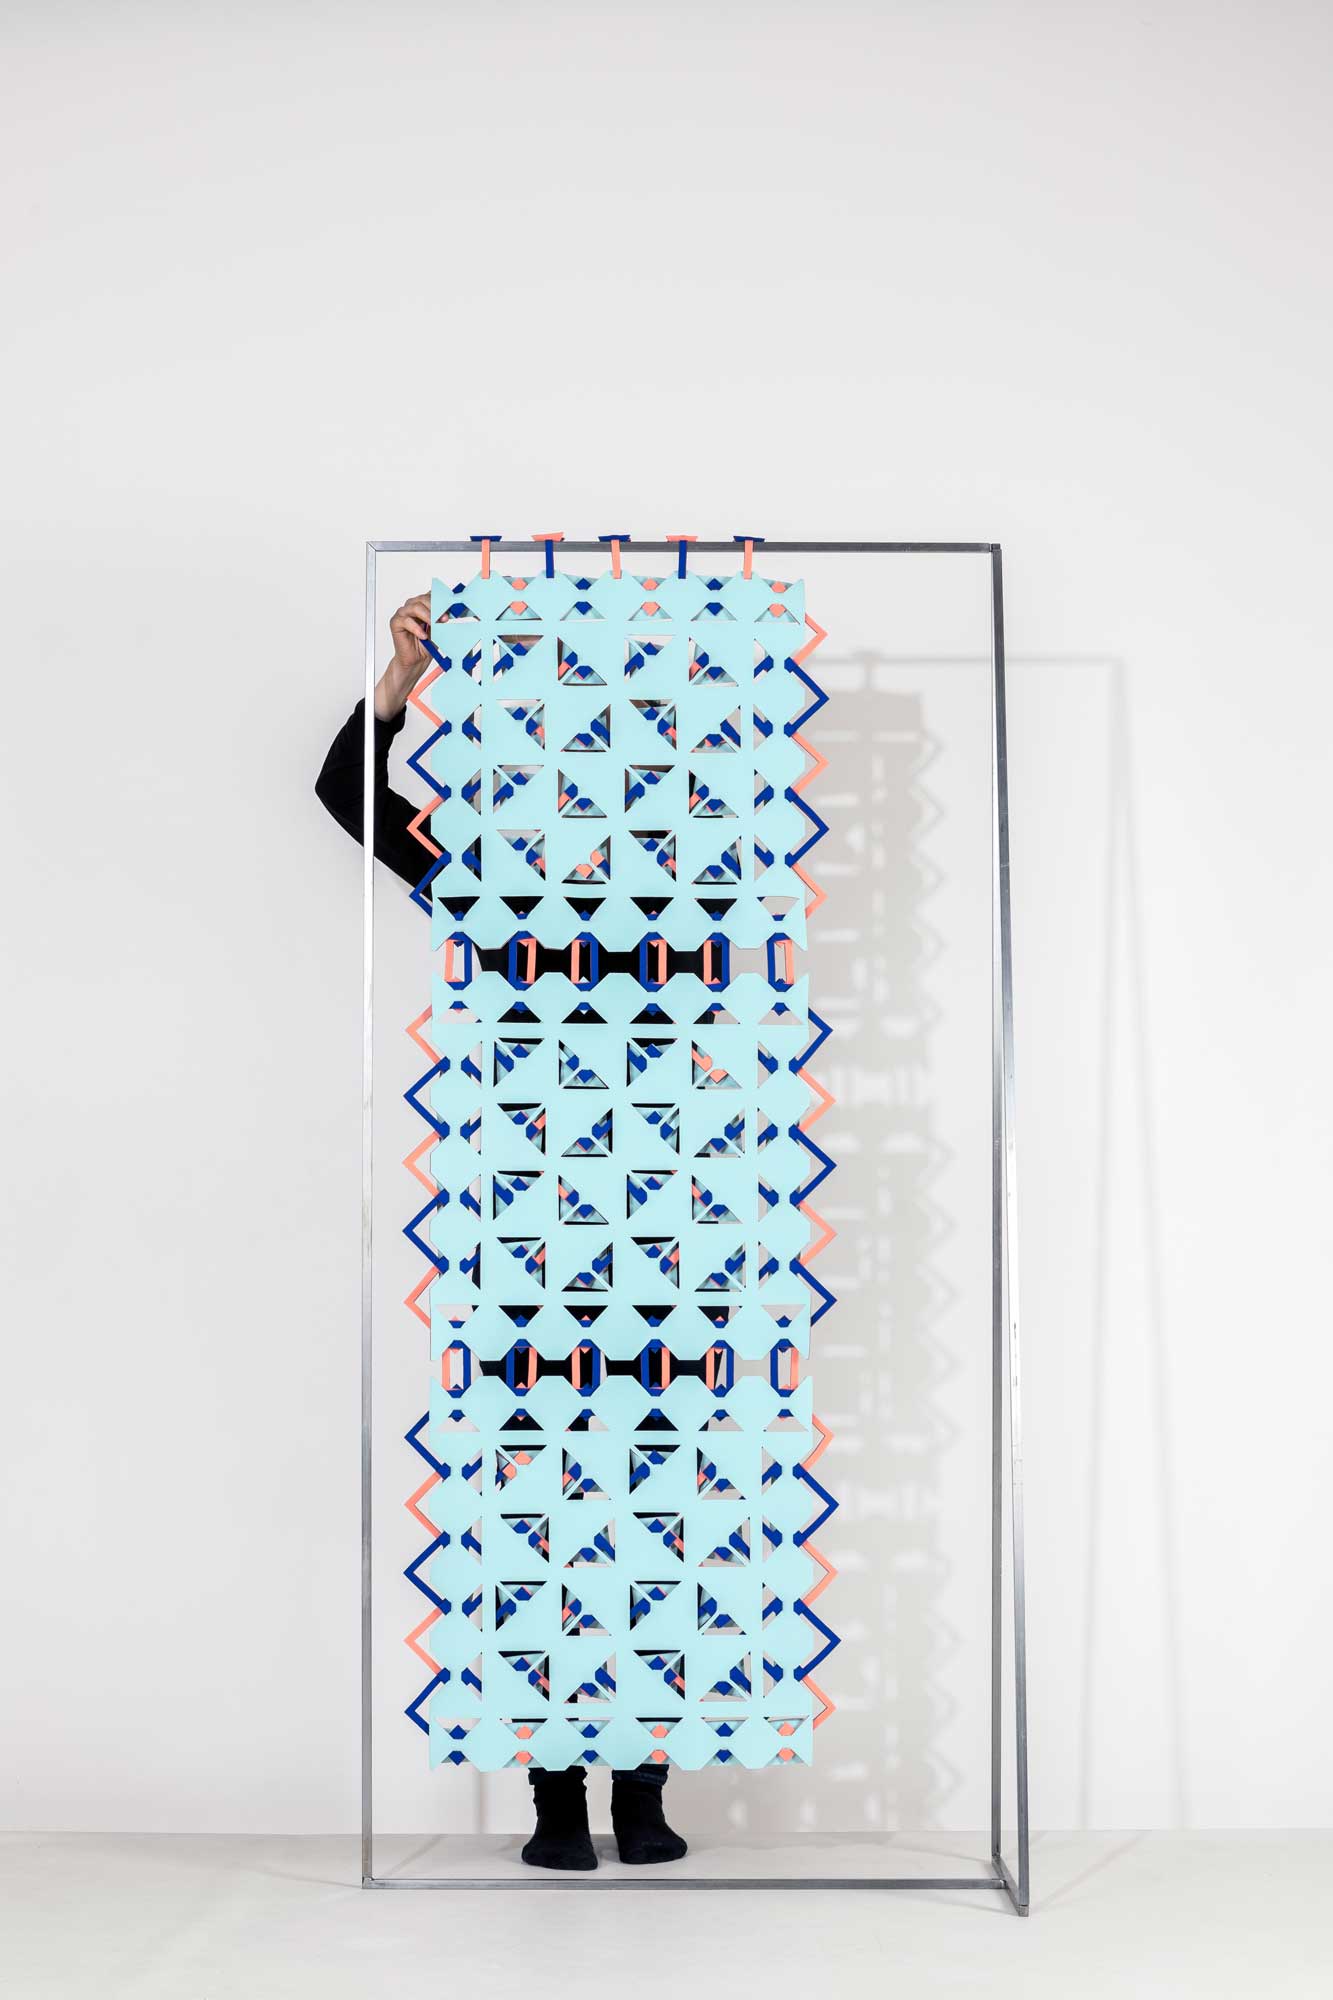 Géométrie variable - Polyester, maille 3D - 151 x 55 cm - 2017 - Photo : Christophe Bustin